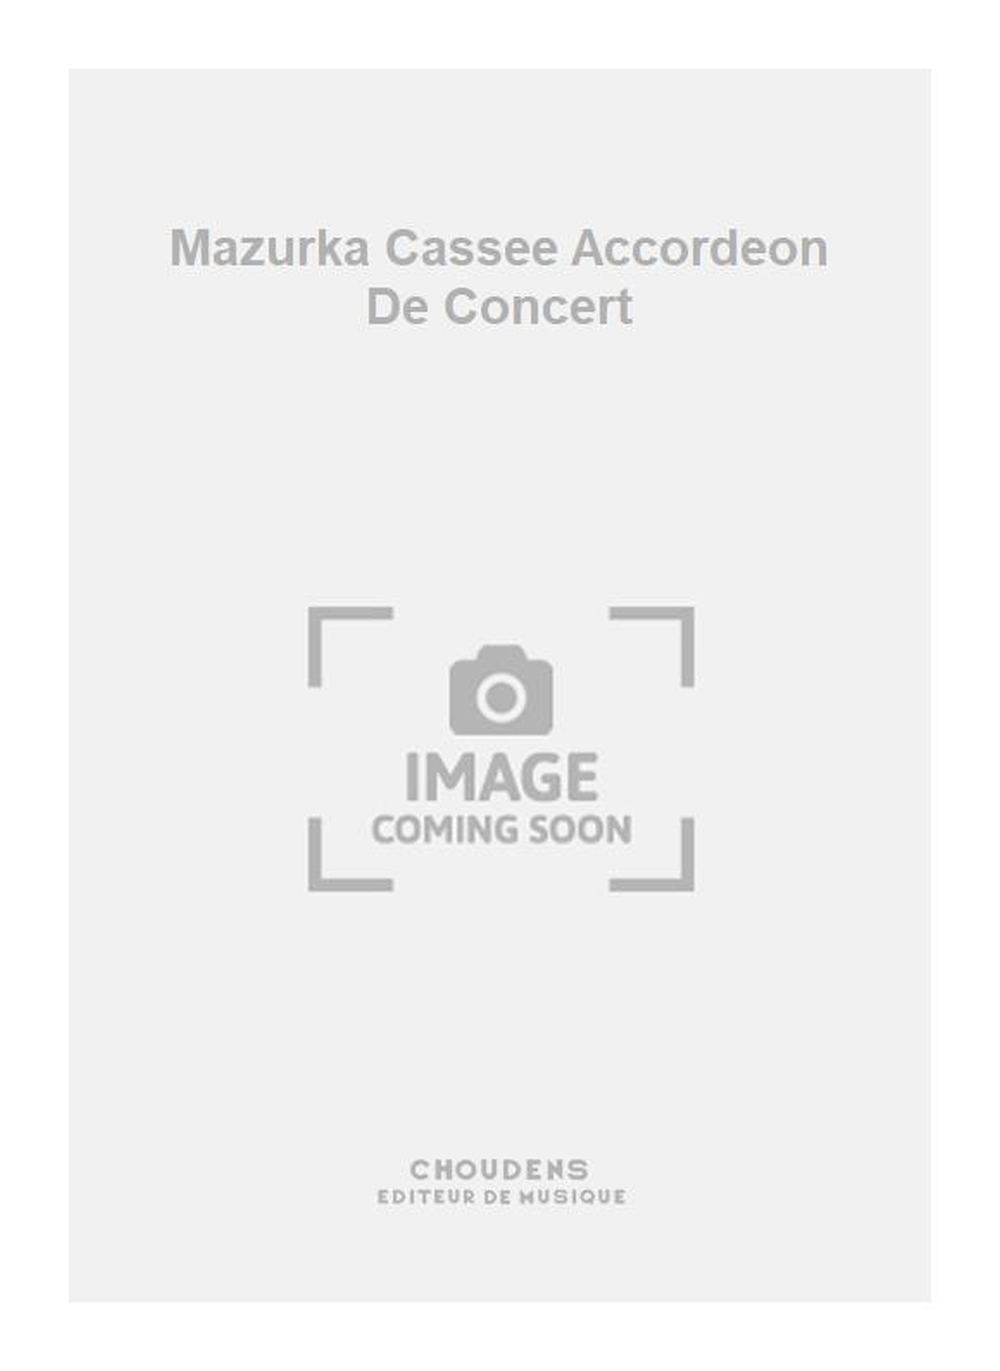 Damase: Mazurka Cassee Accordeon De Concert